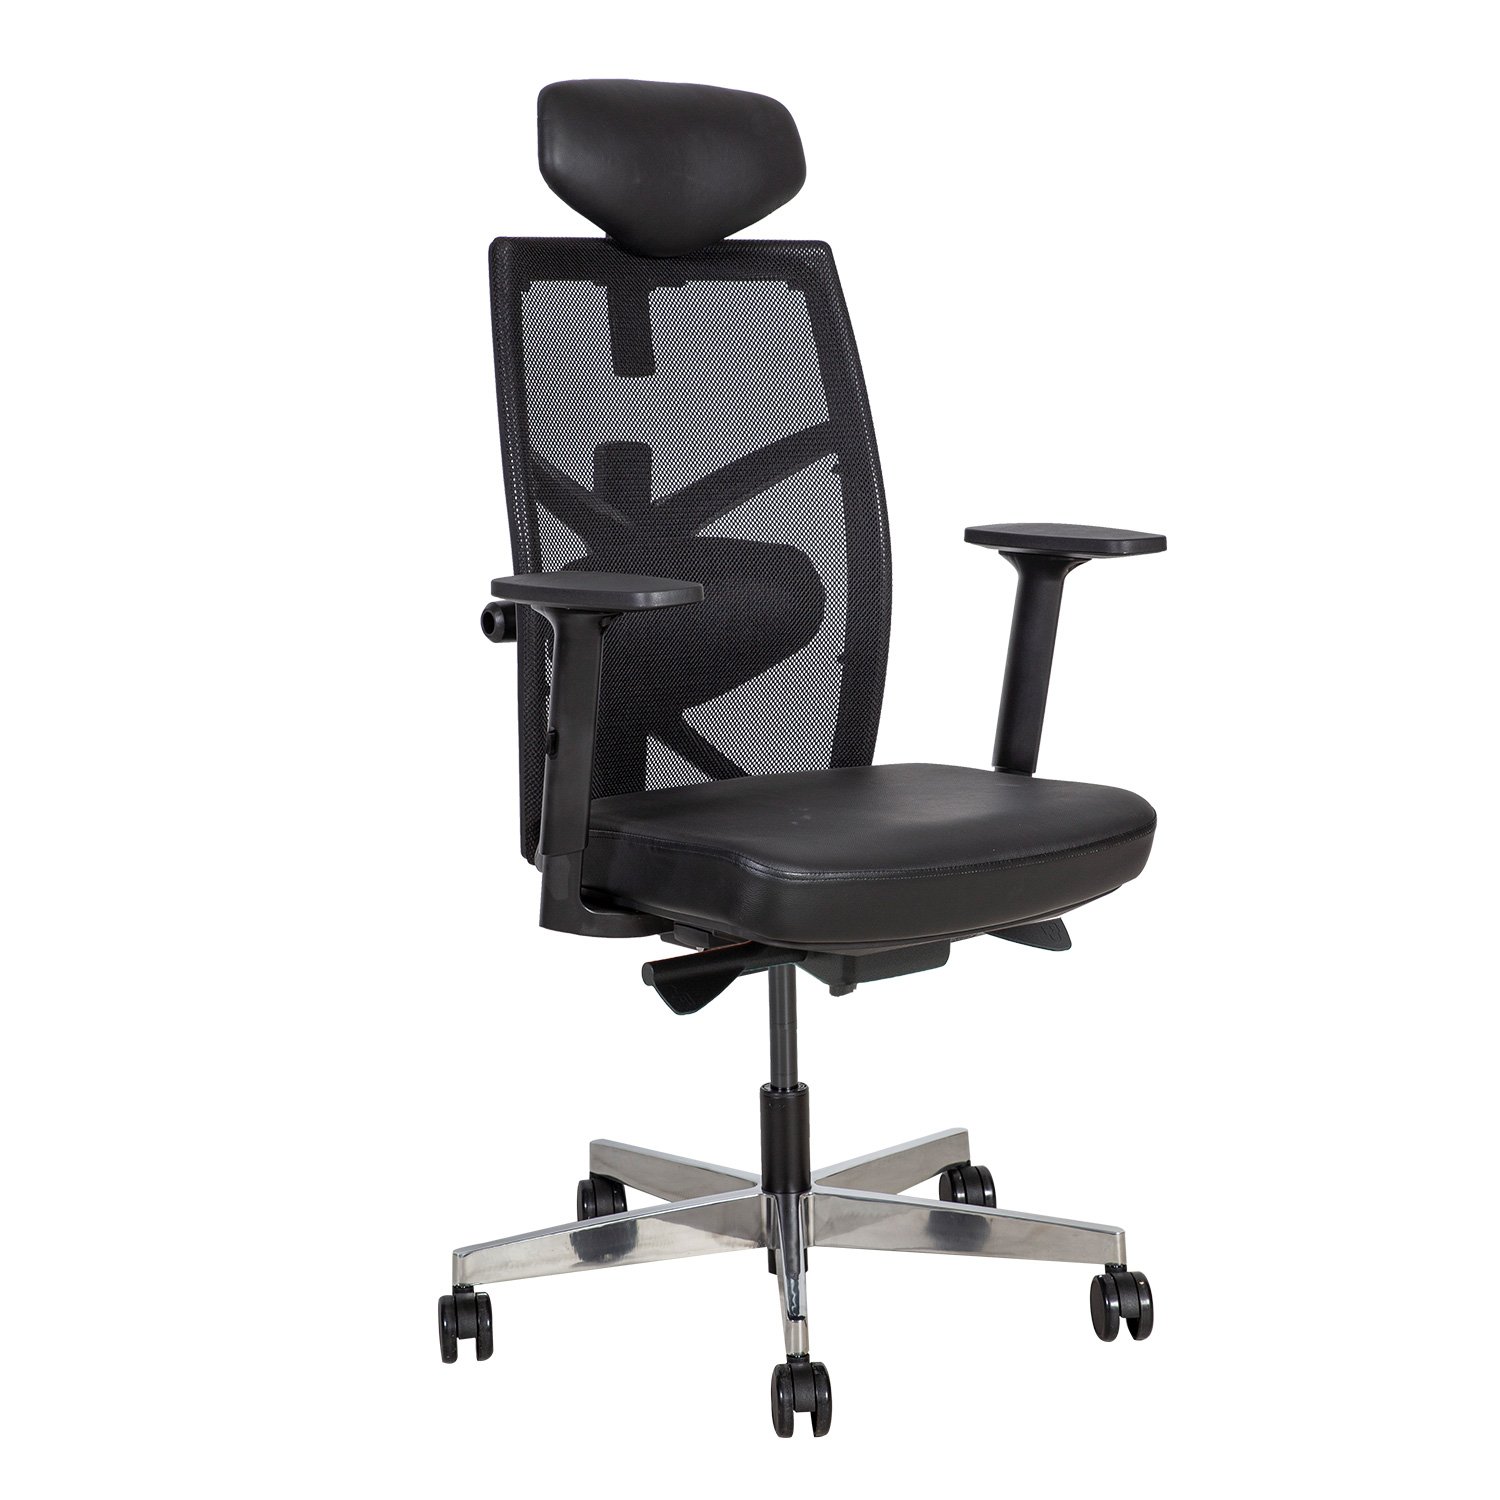 Biuro kėdė TUNE, 70x70x111-128 cm, juoda